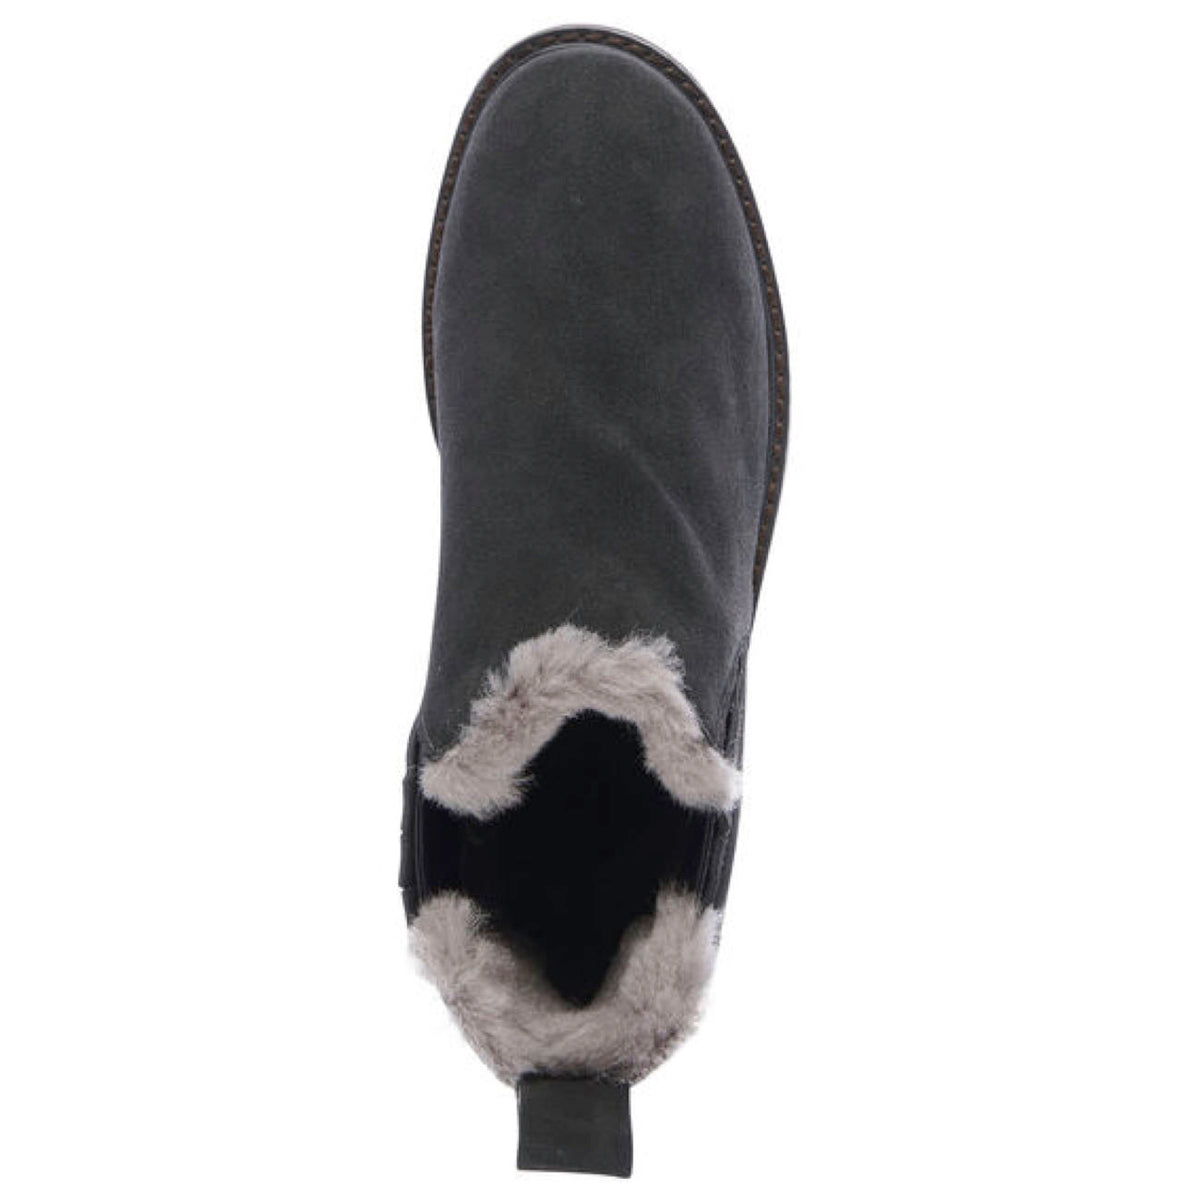 EMU Australia, Moira, Waterproof Suede Leather, Boot, Dark Grey